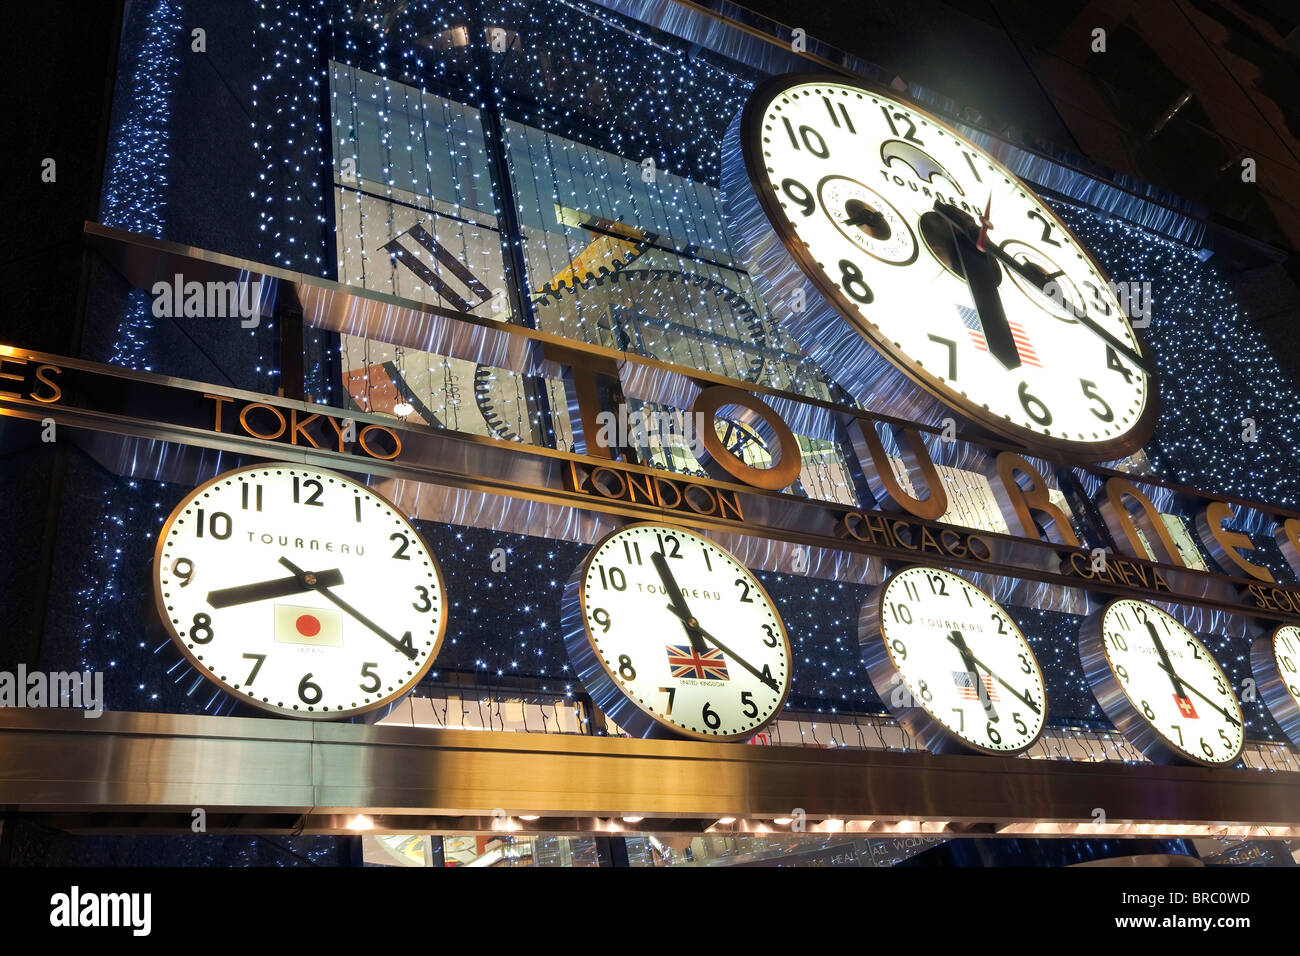 Clocks showing various world city times outside the Tourneau Store, Manhattan, New York City, New York, USA Stock Photo